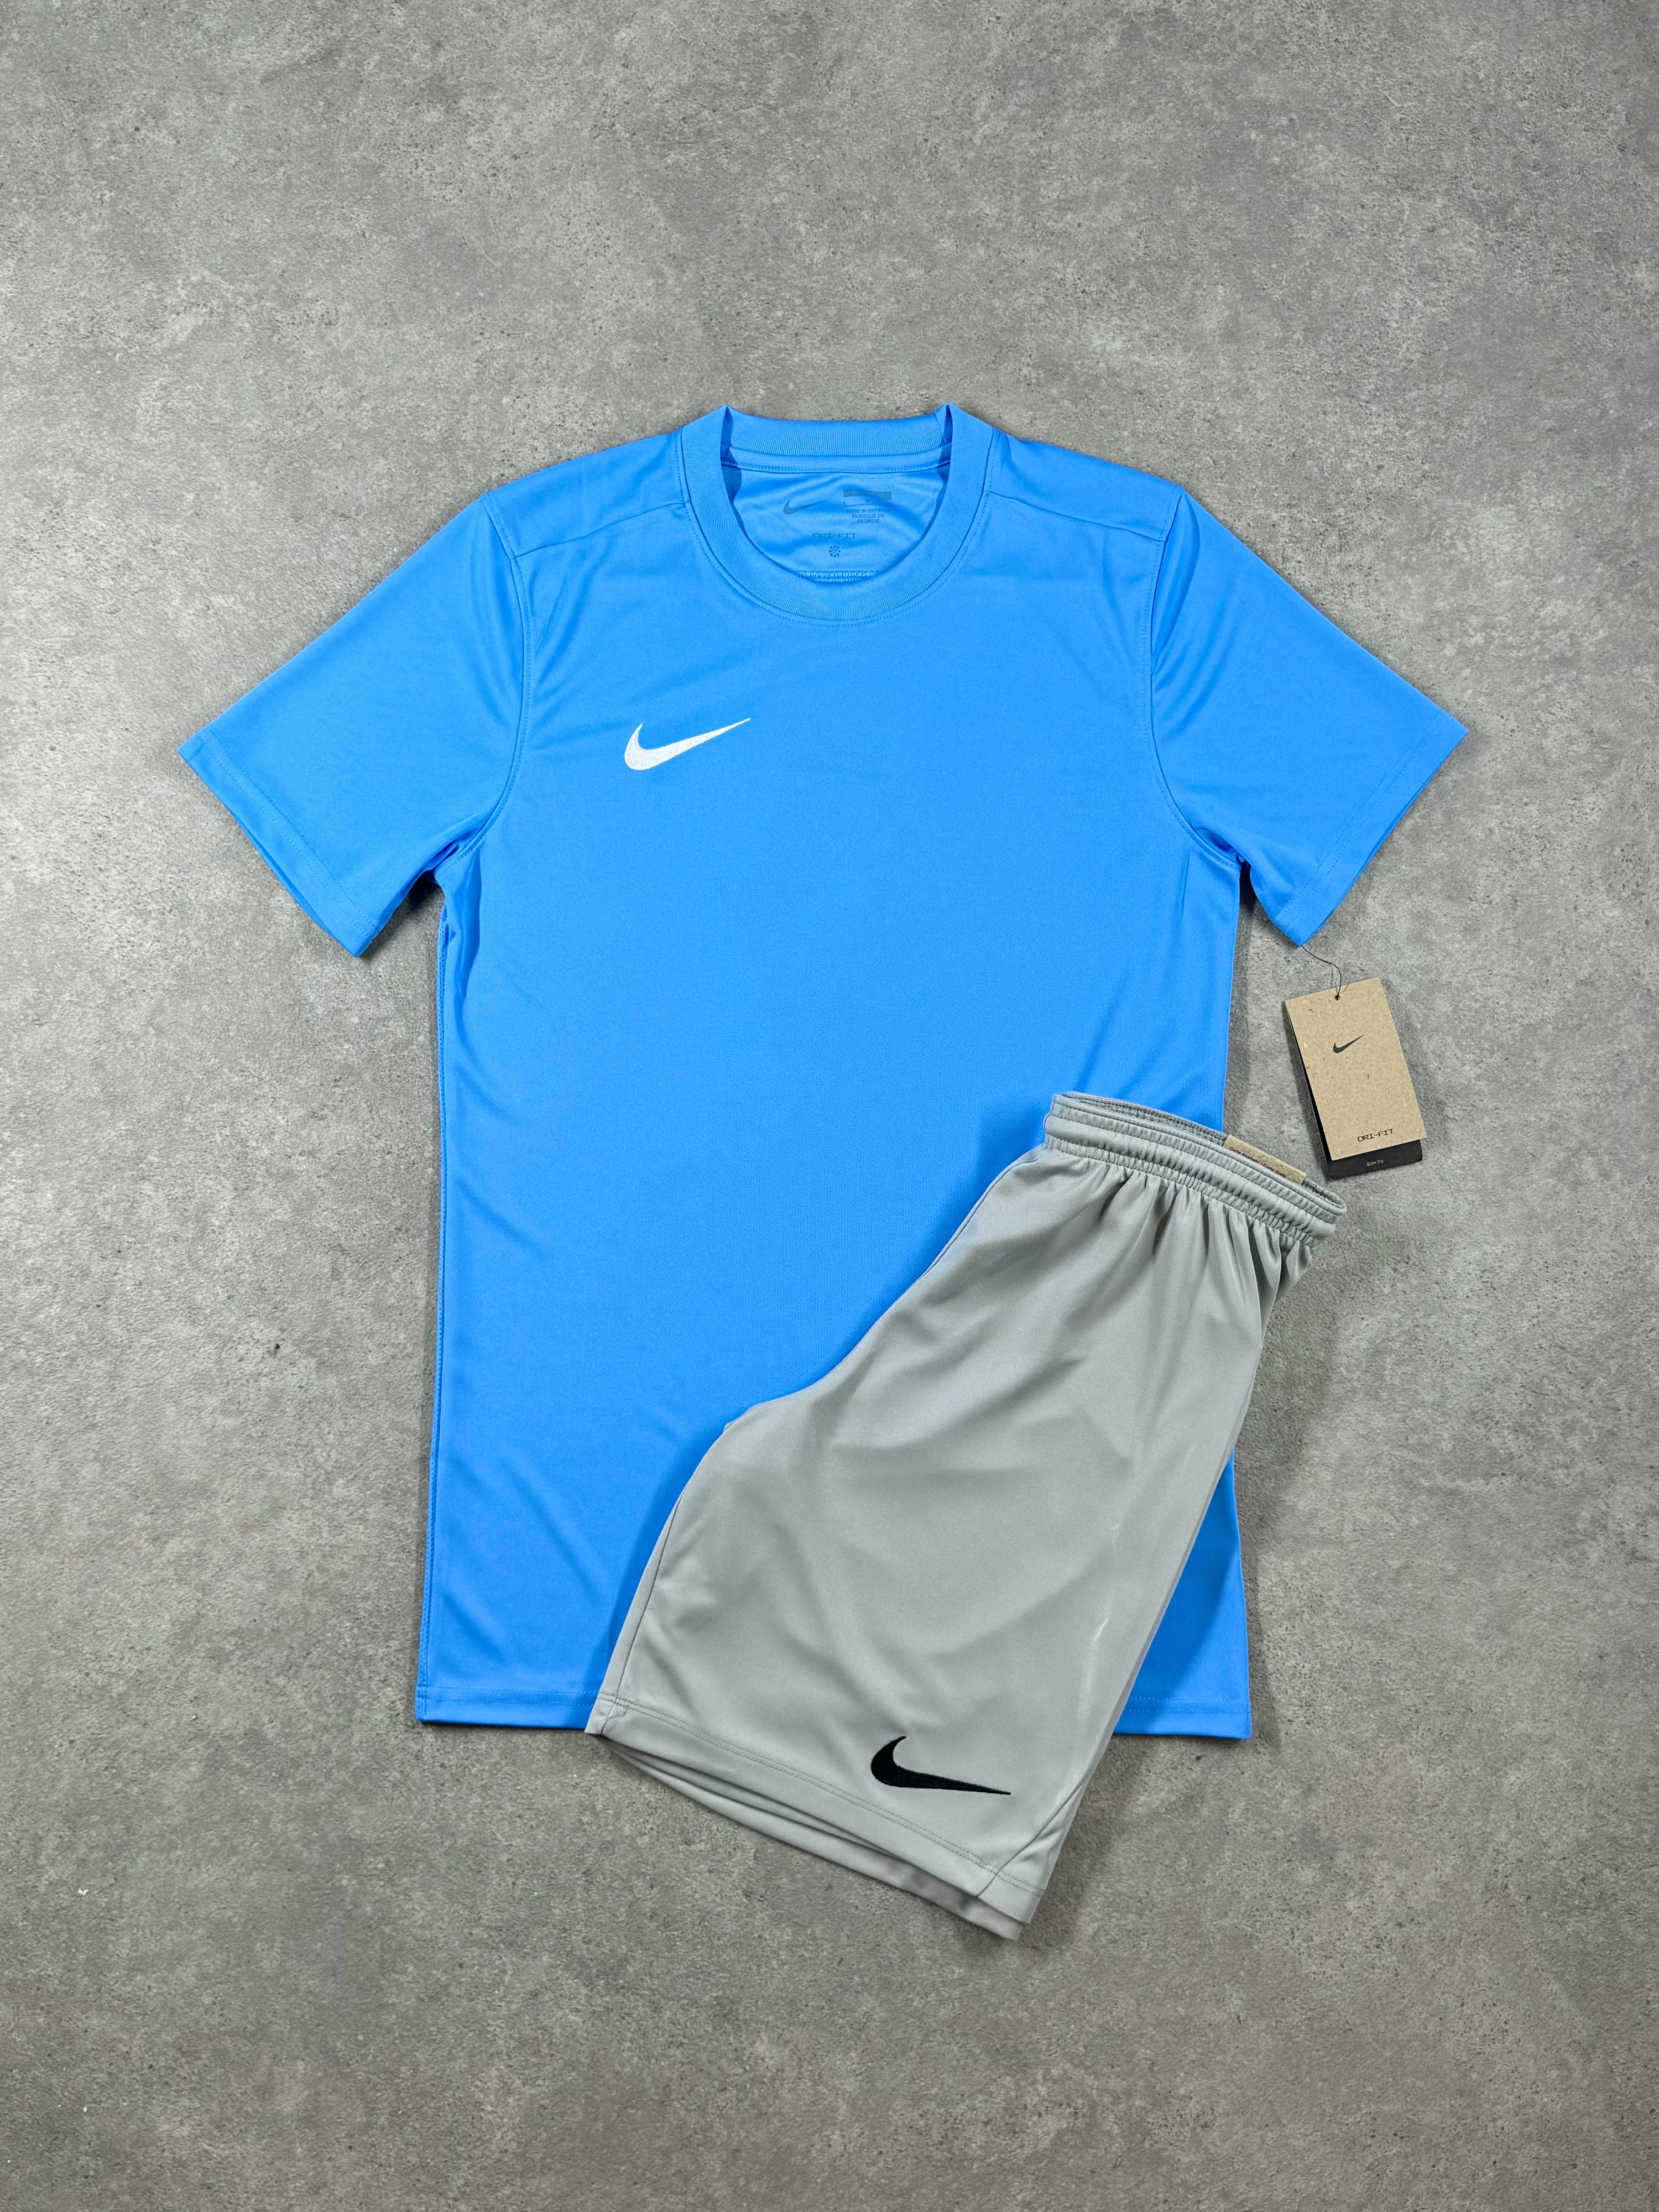 Nike - Dri Fit Set - Sky Blue/Grey